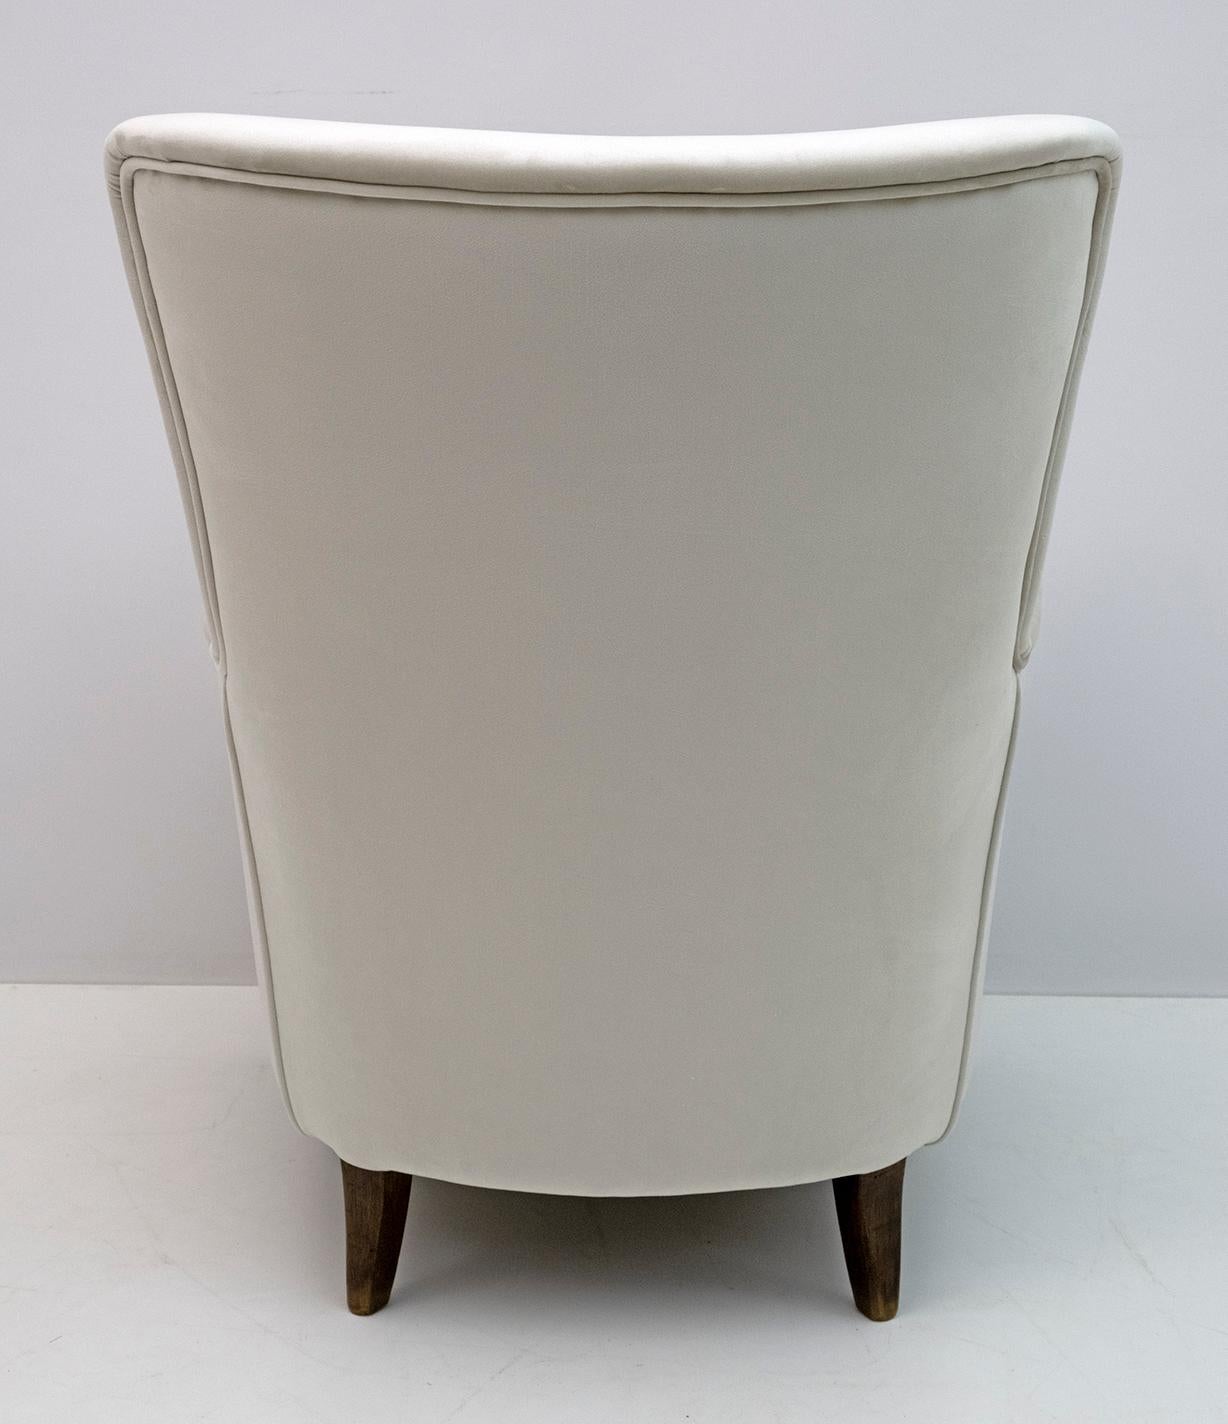 Pair of Gio Ponti Style Mid-Century Modern Italian Velvet Armchairs for Isa, 50s For Sale 5